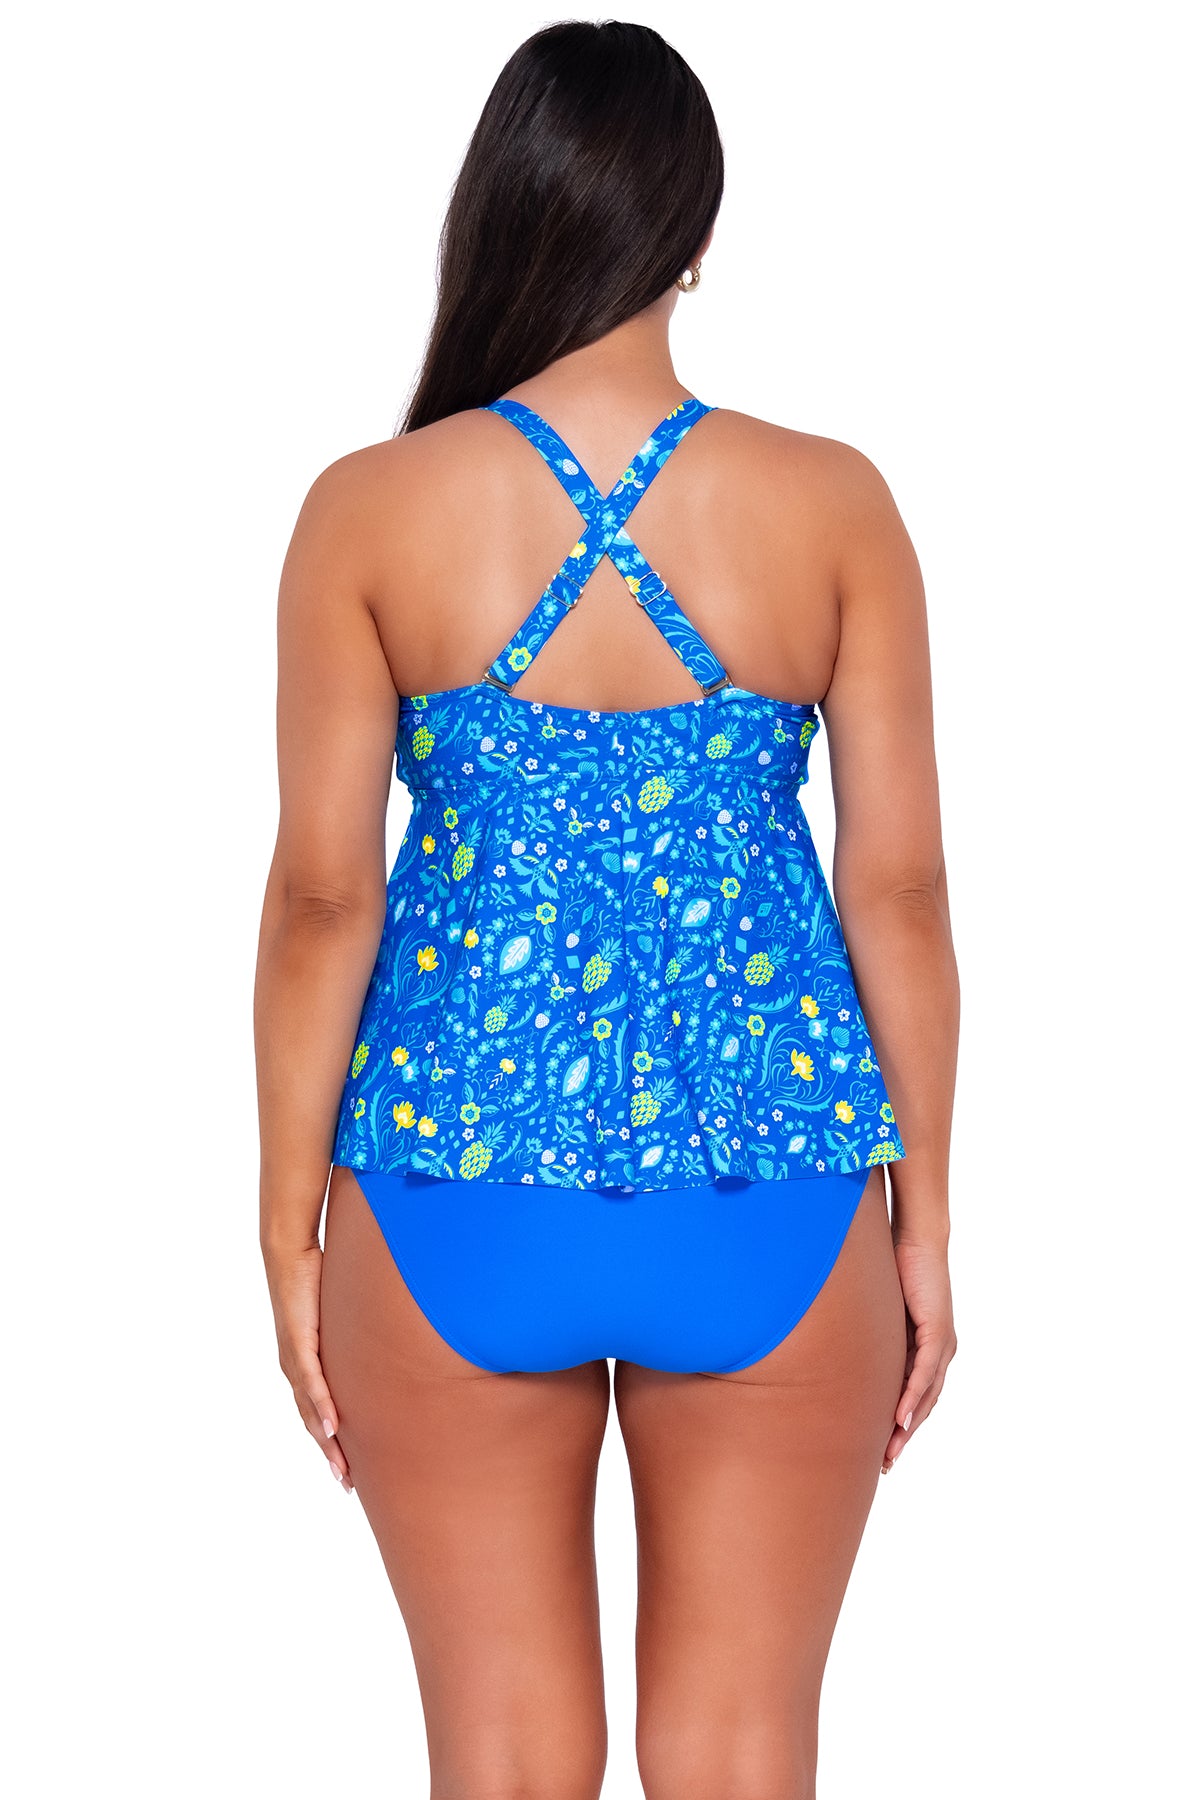 Front Back pose #1 of Nicki wearing Sunsets Escape Pineapple Grove Marin Tankini Top with matching Hannah High Waist bikini bottom